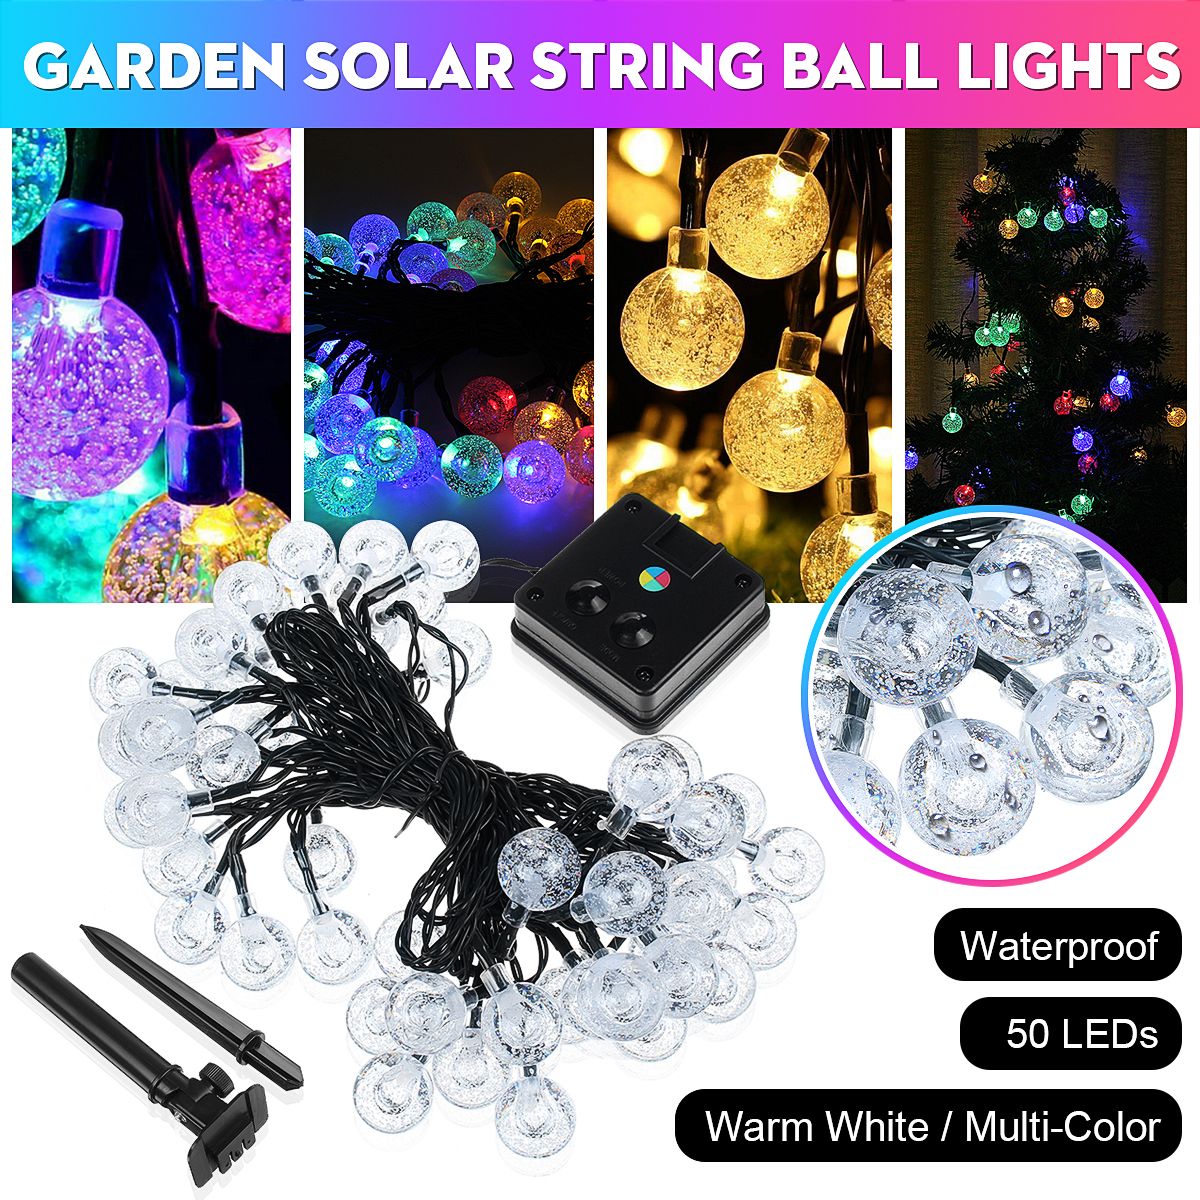 Outdoor-Solar-Power-50-LED-String-Light-Garden-Decor-Landscape-Waterproof-Lamp-Christmas-Tree-Decora-1672122